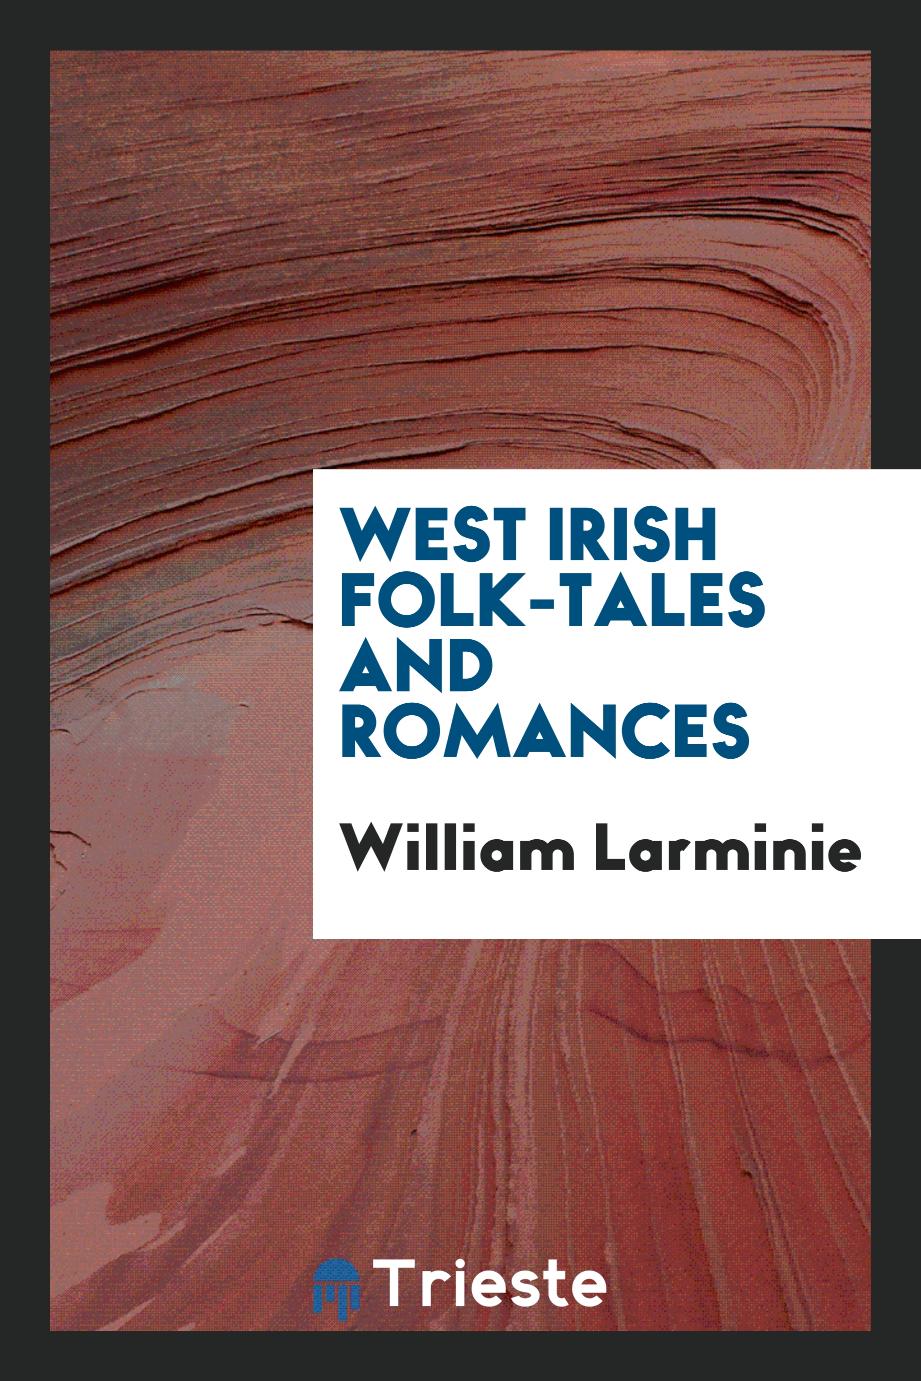 West Irish folk-tales and romances